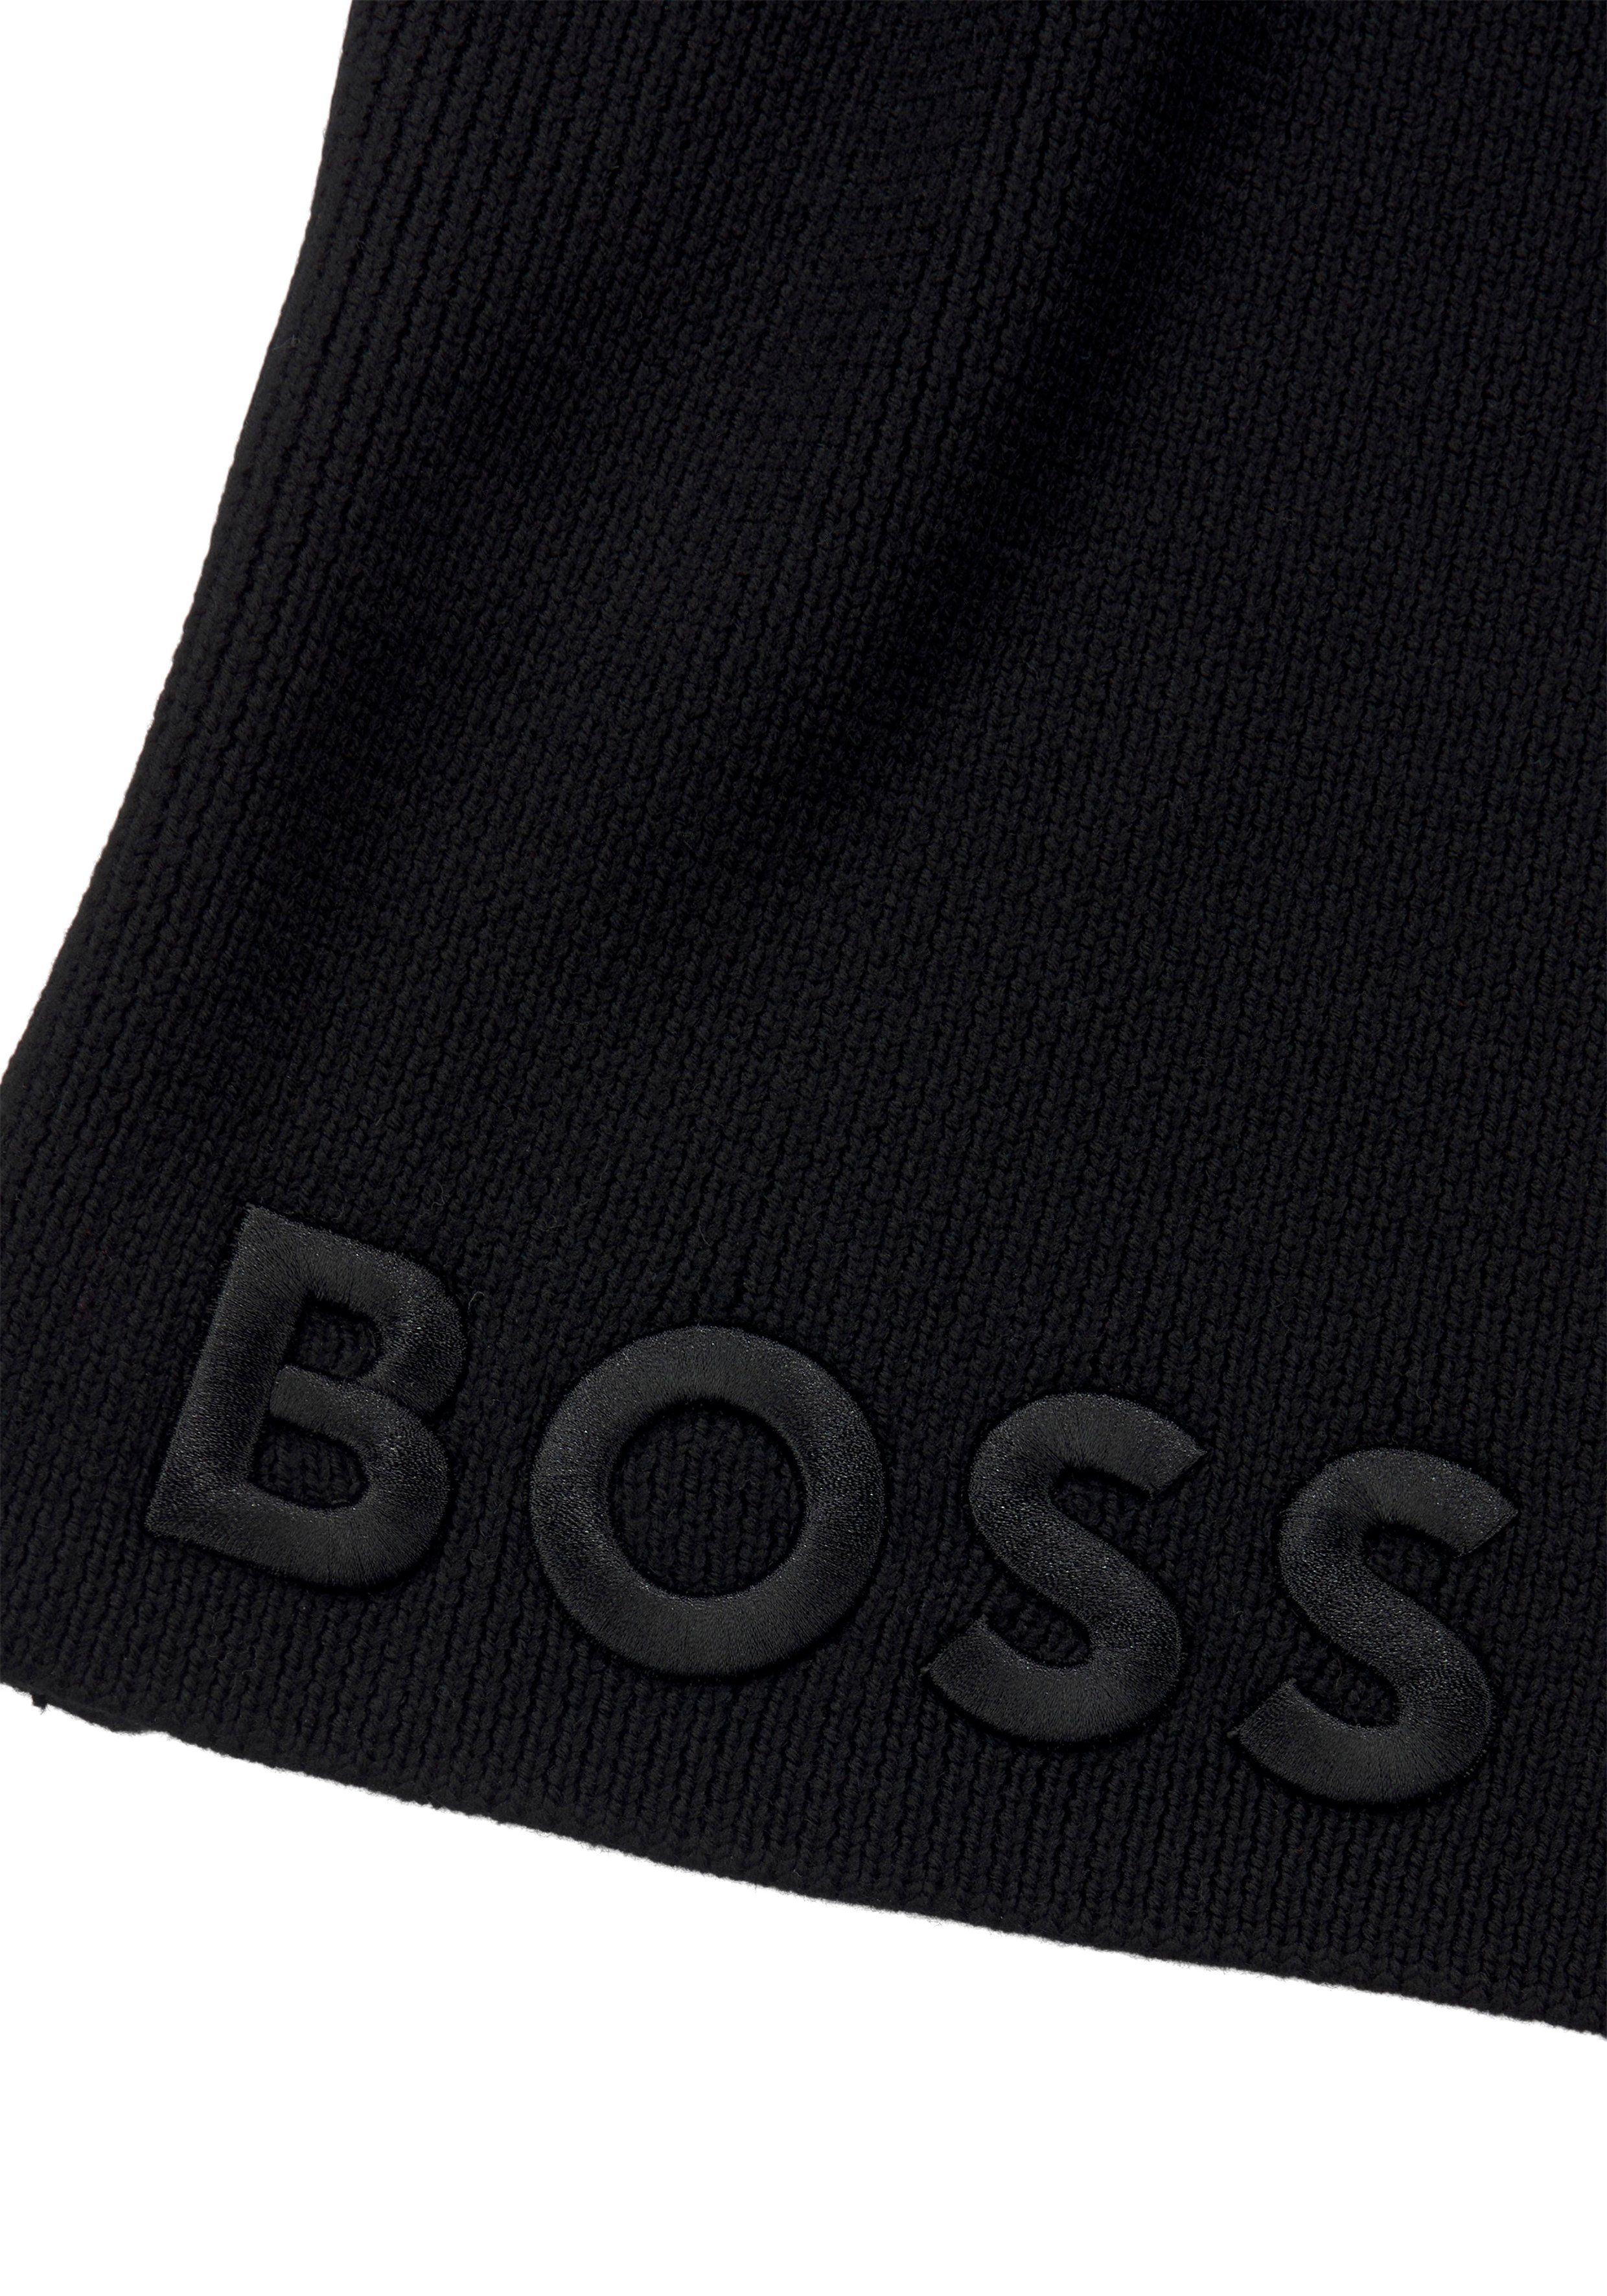 Black BOSS tonaler von Boss BOSS Logo-Stickerei, Schal Lara_scarf, mit Schal Womanswear